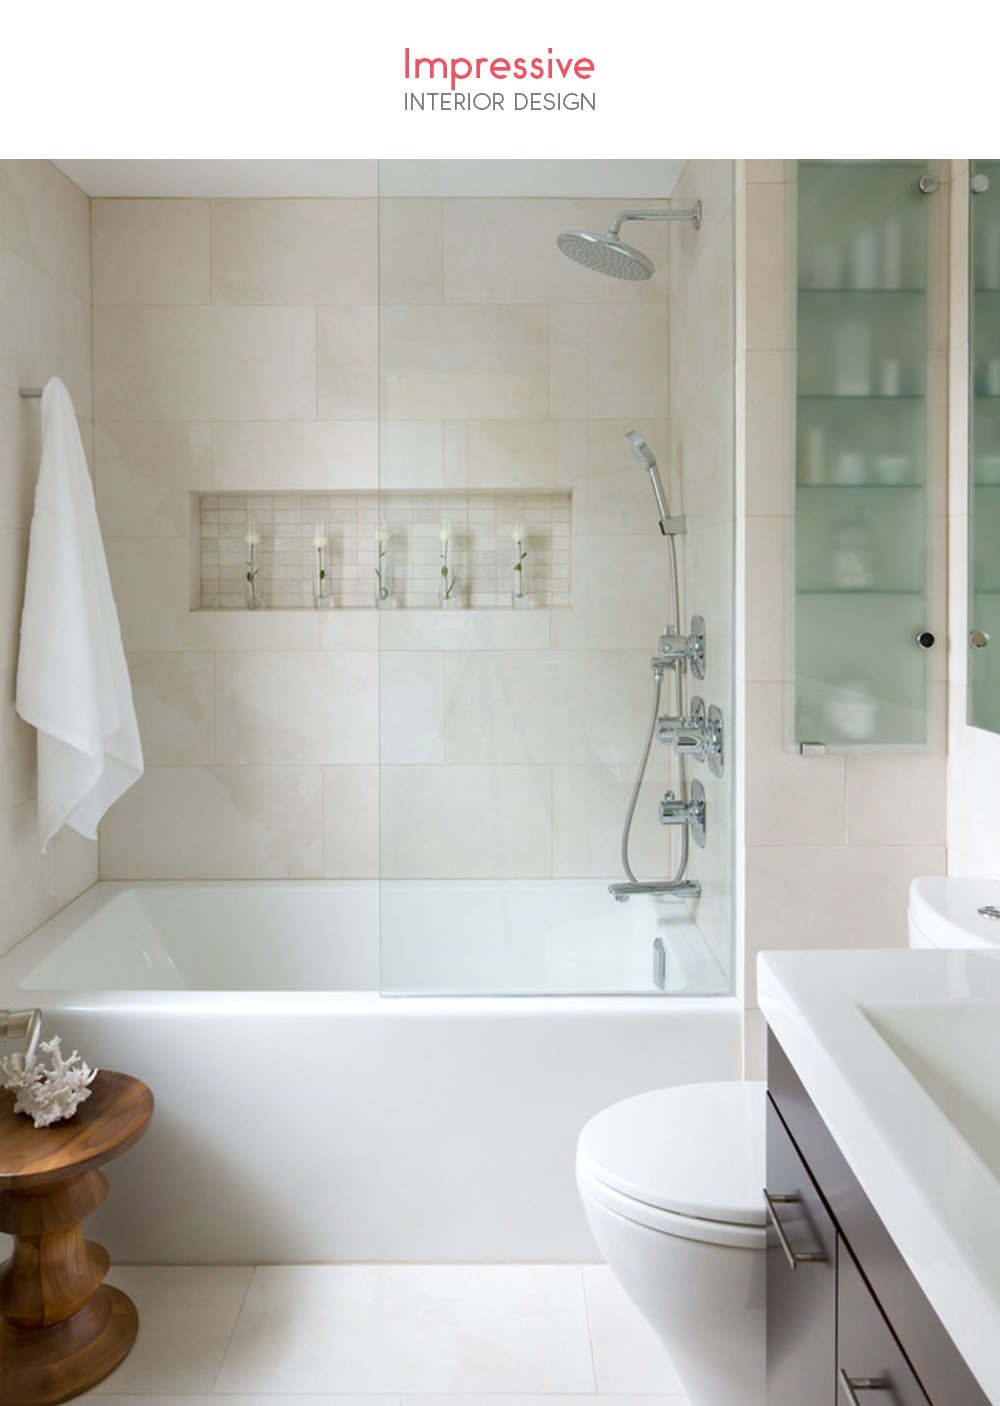 How to Decorate a Bathroom – Impressive Interior Design